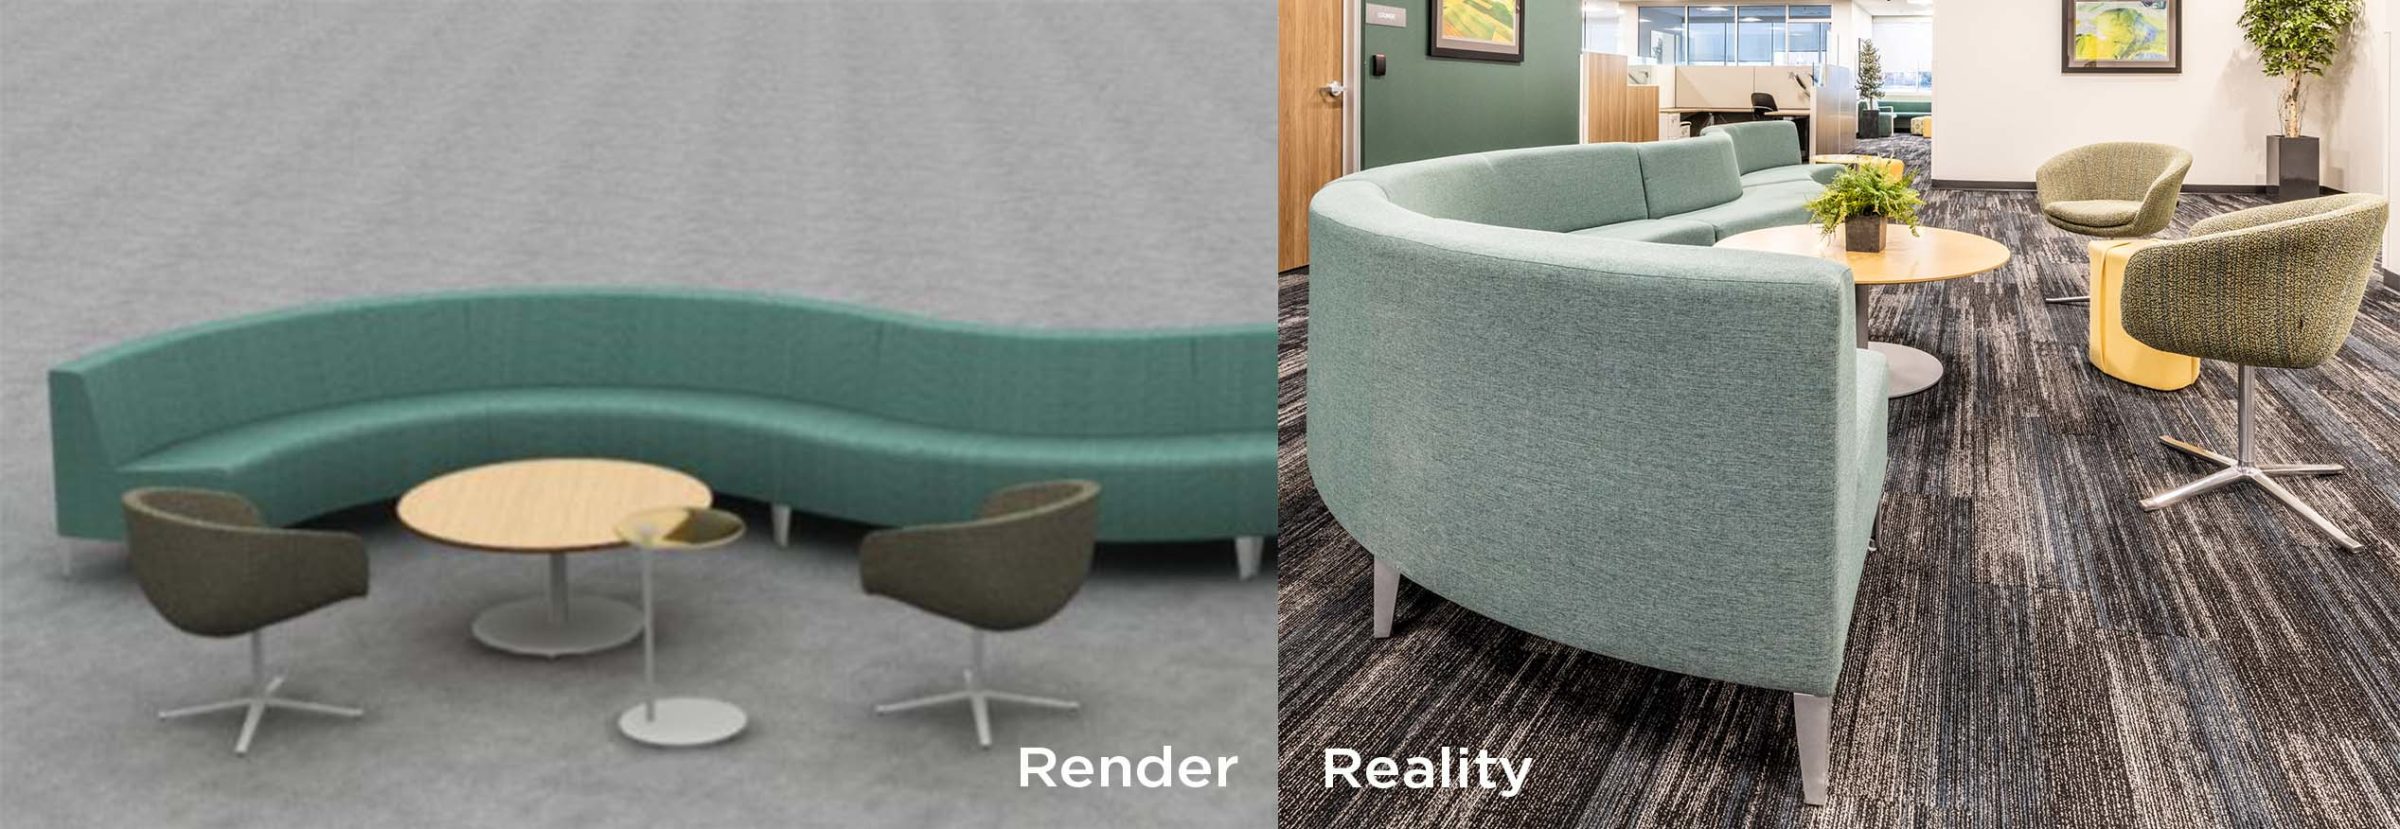 ICCU Design render to reality